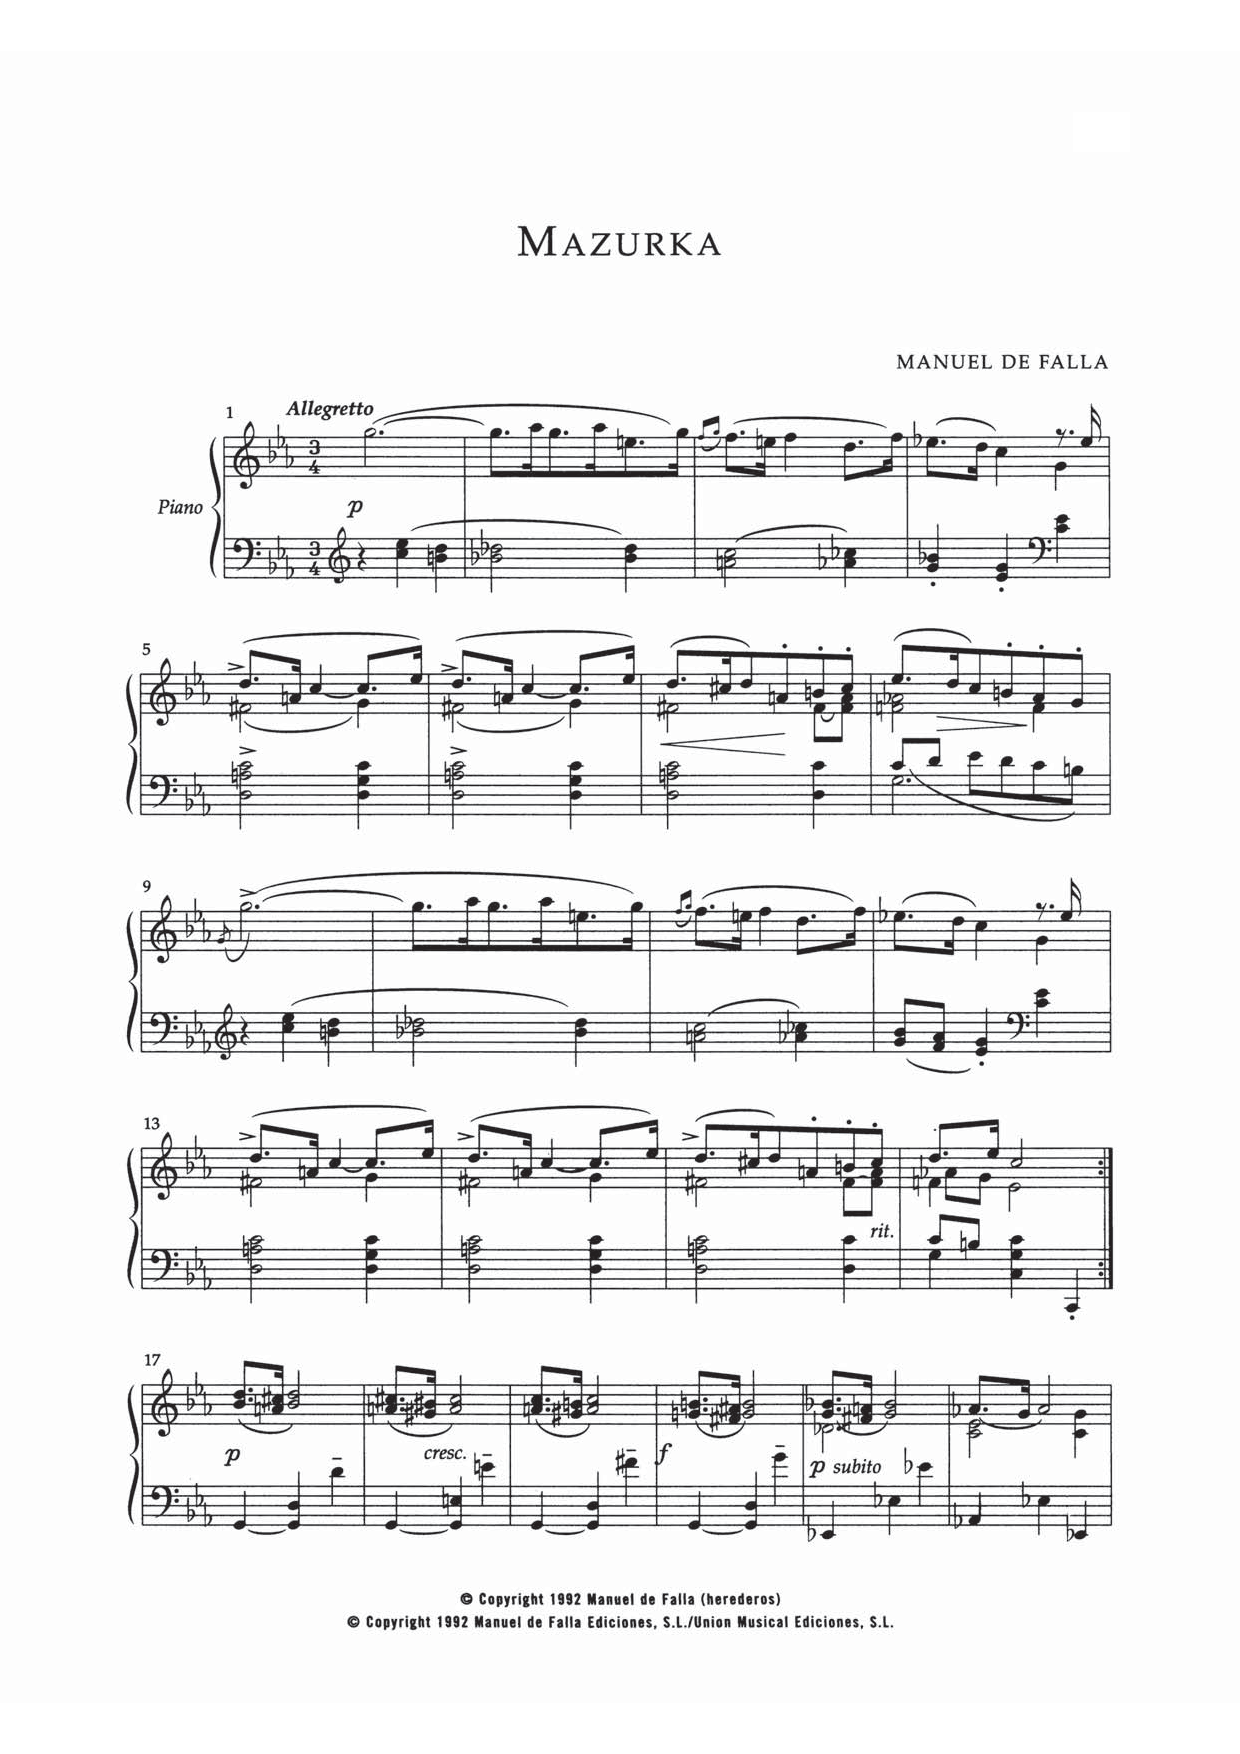 Manuel De Falla Mazurka In Do Menor sheet music notes and chords arranged for Piano Solo